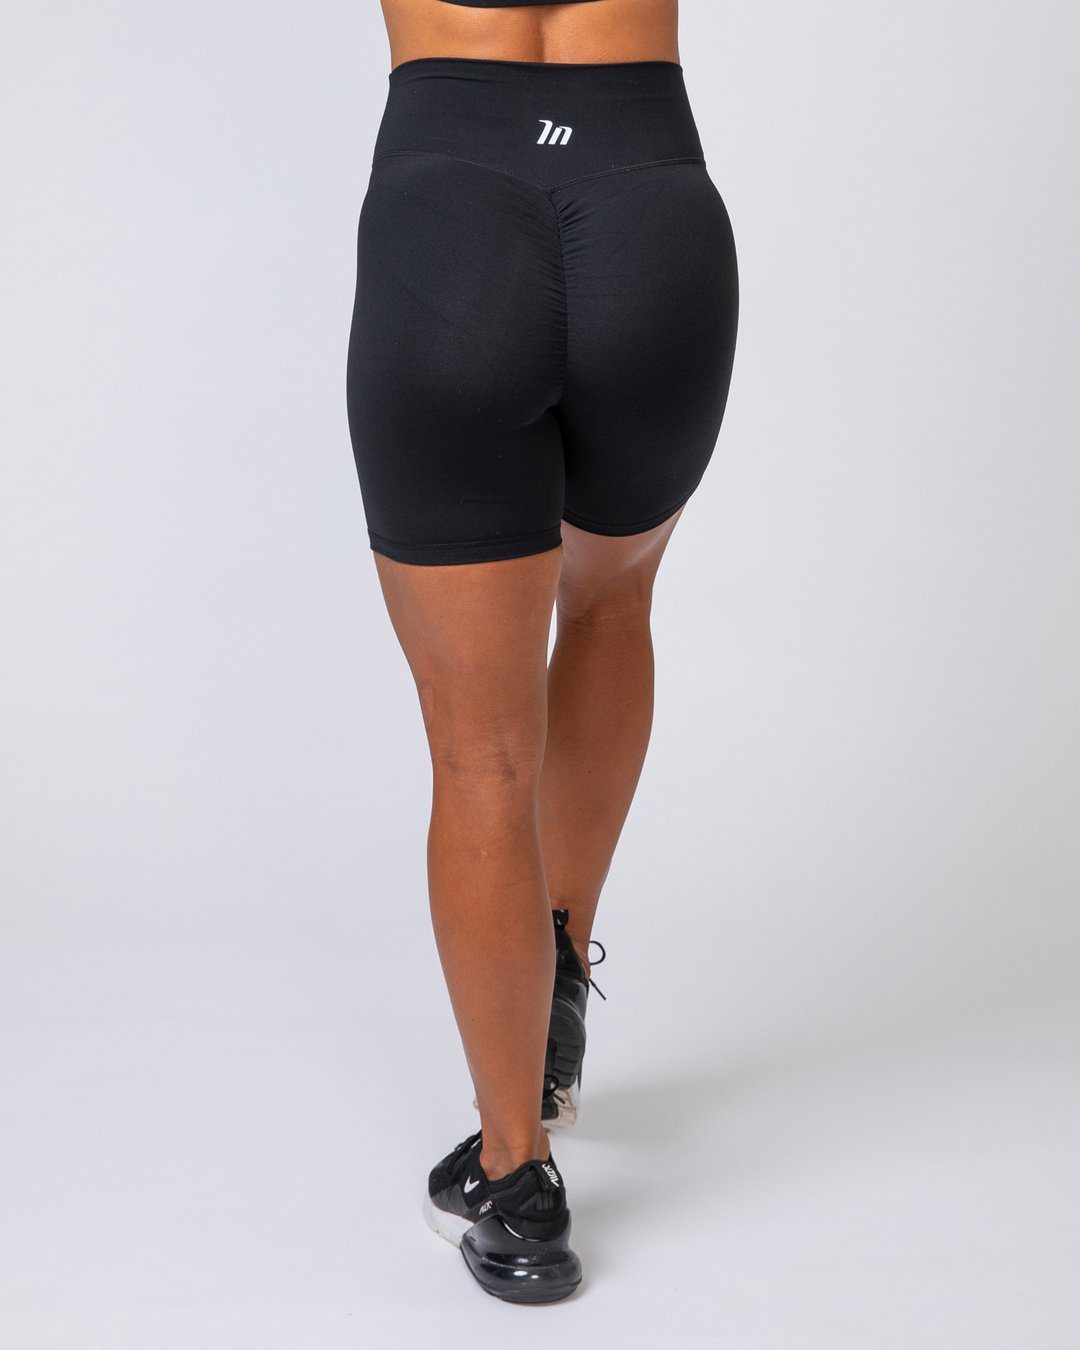 Muscle Nation Bike Shorts - Black 